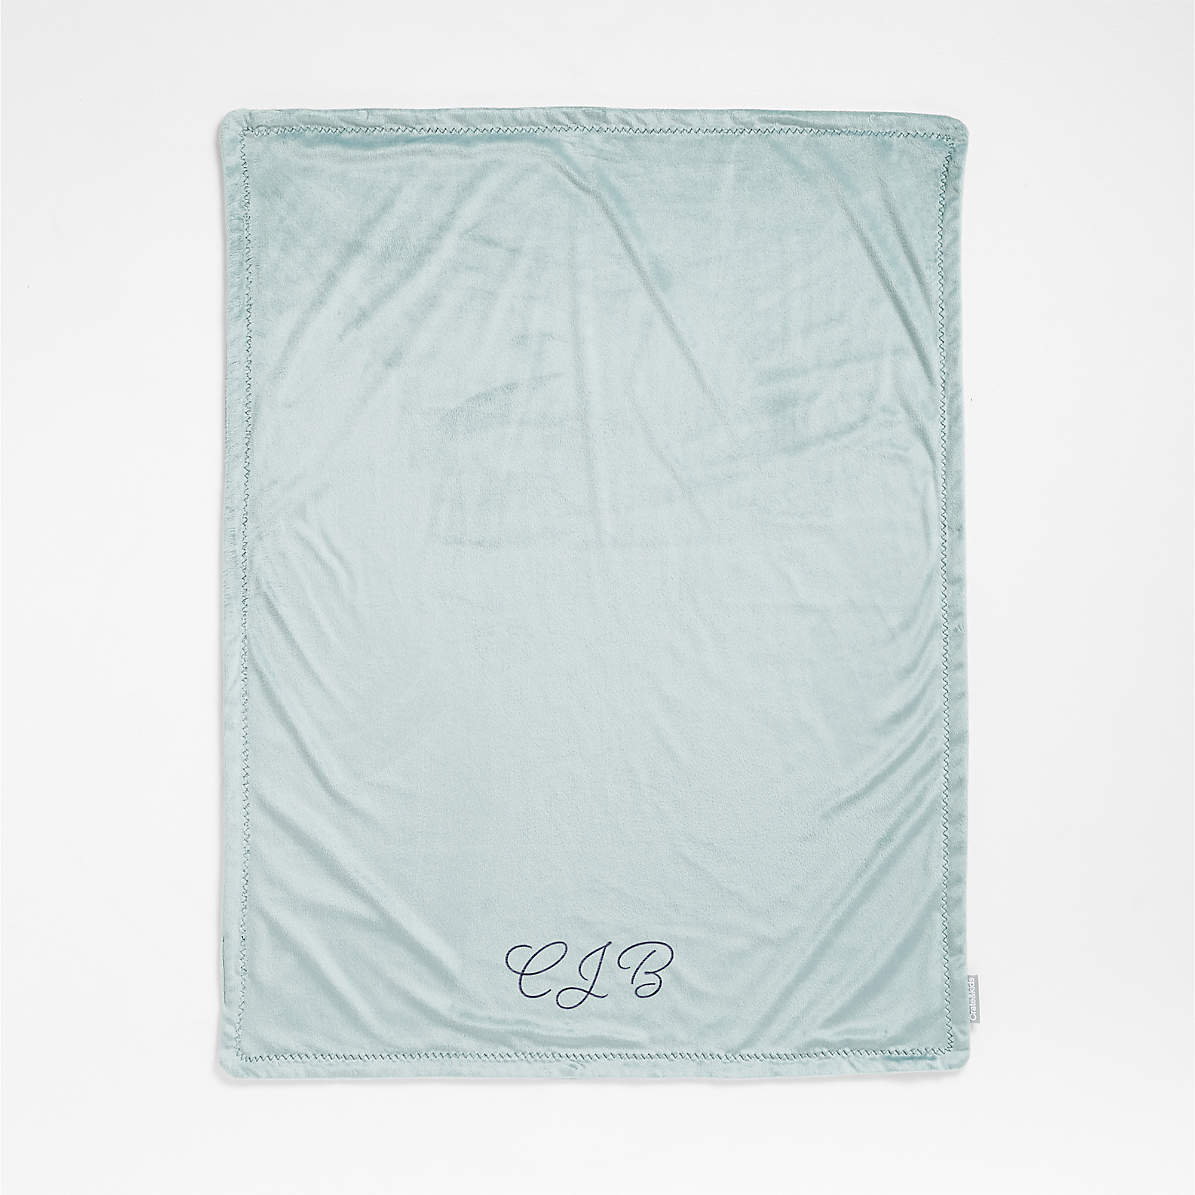 Large Polka Dot Monogram Personalized Stroller Blanket or Baby Blanket Crib 36 x 53